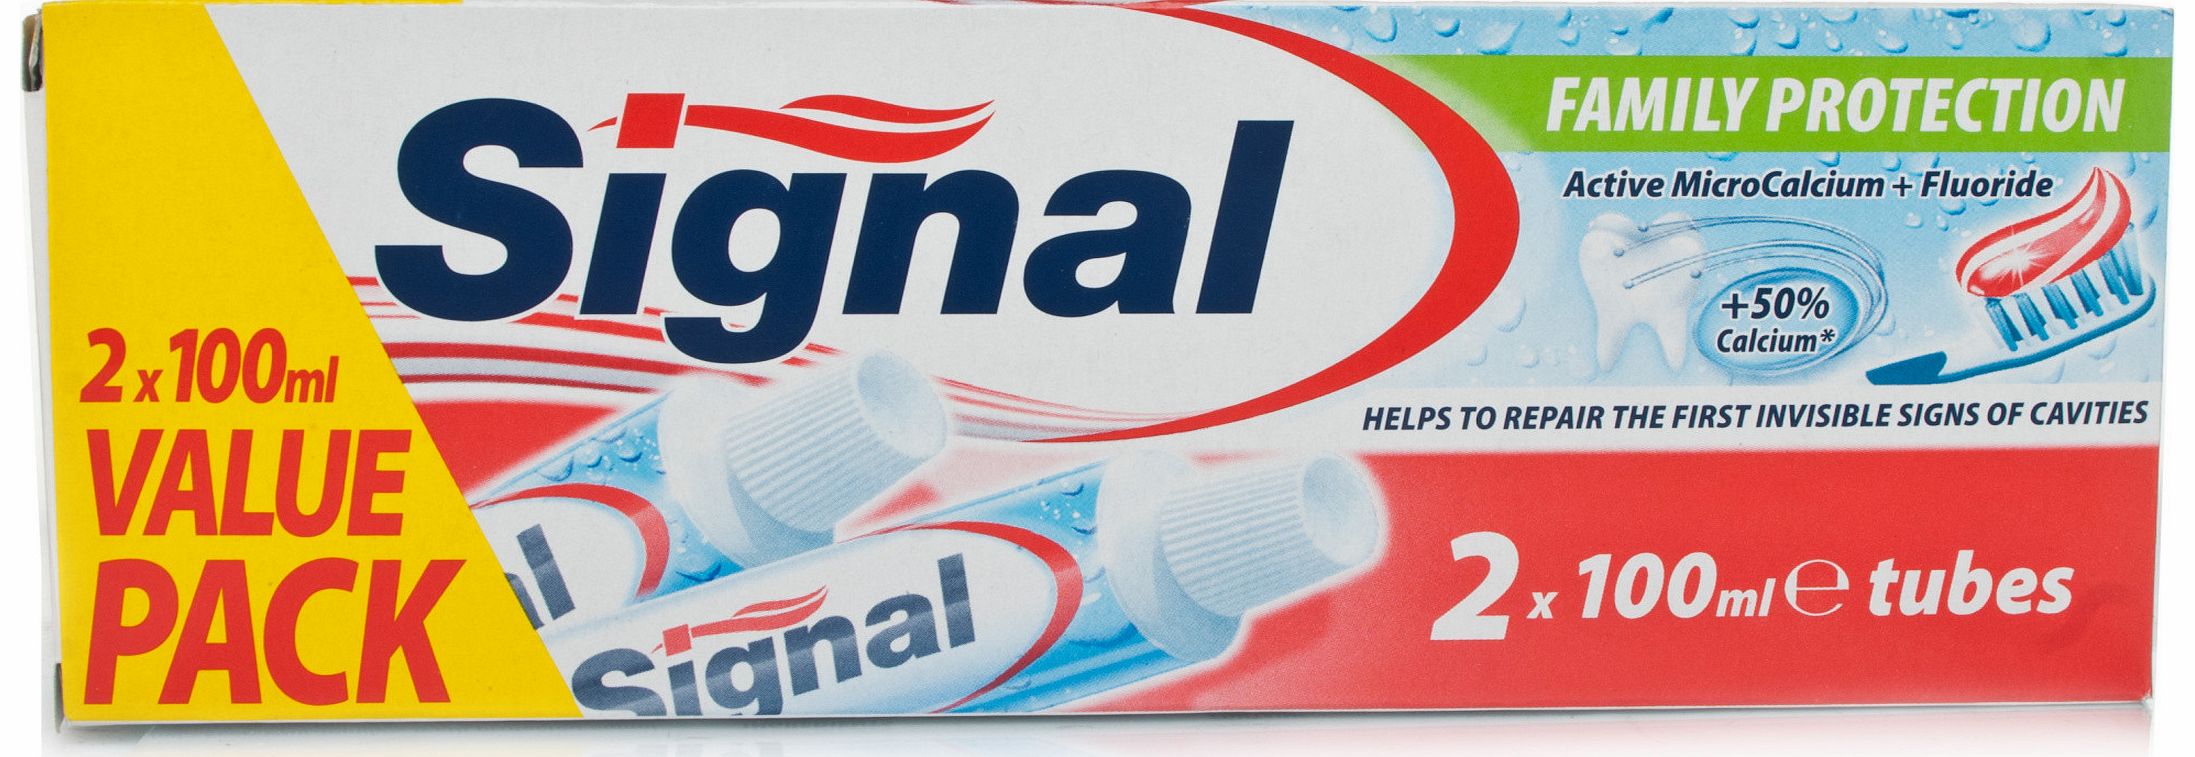 Family Protection Original Toothpaste